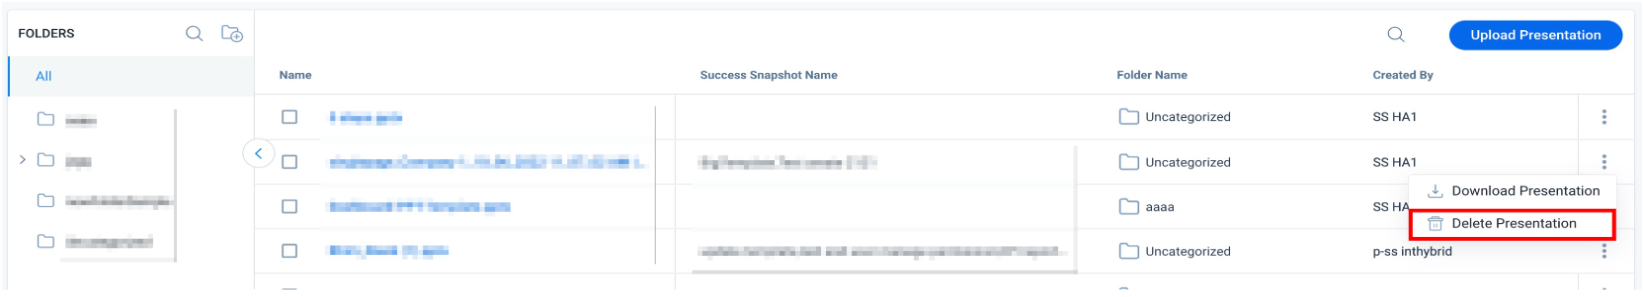 Overview of Success Snapshot_Delete Presentation.jpg